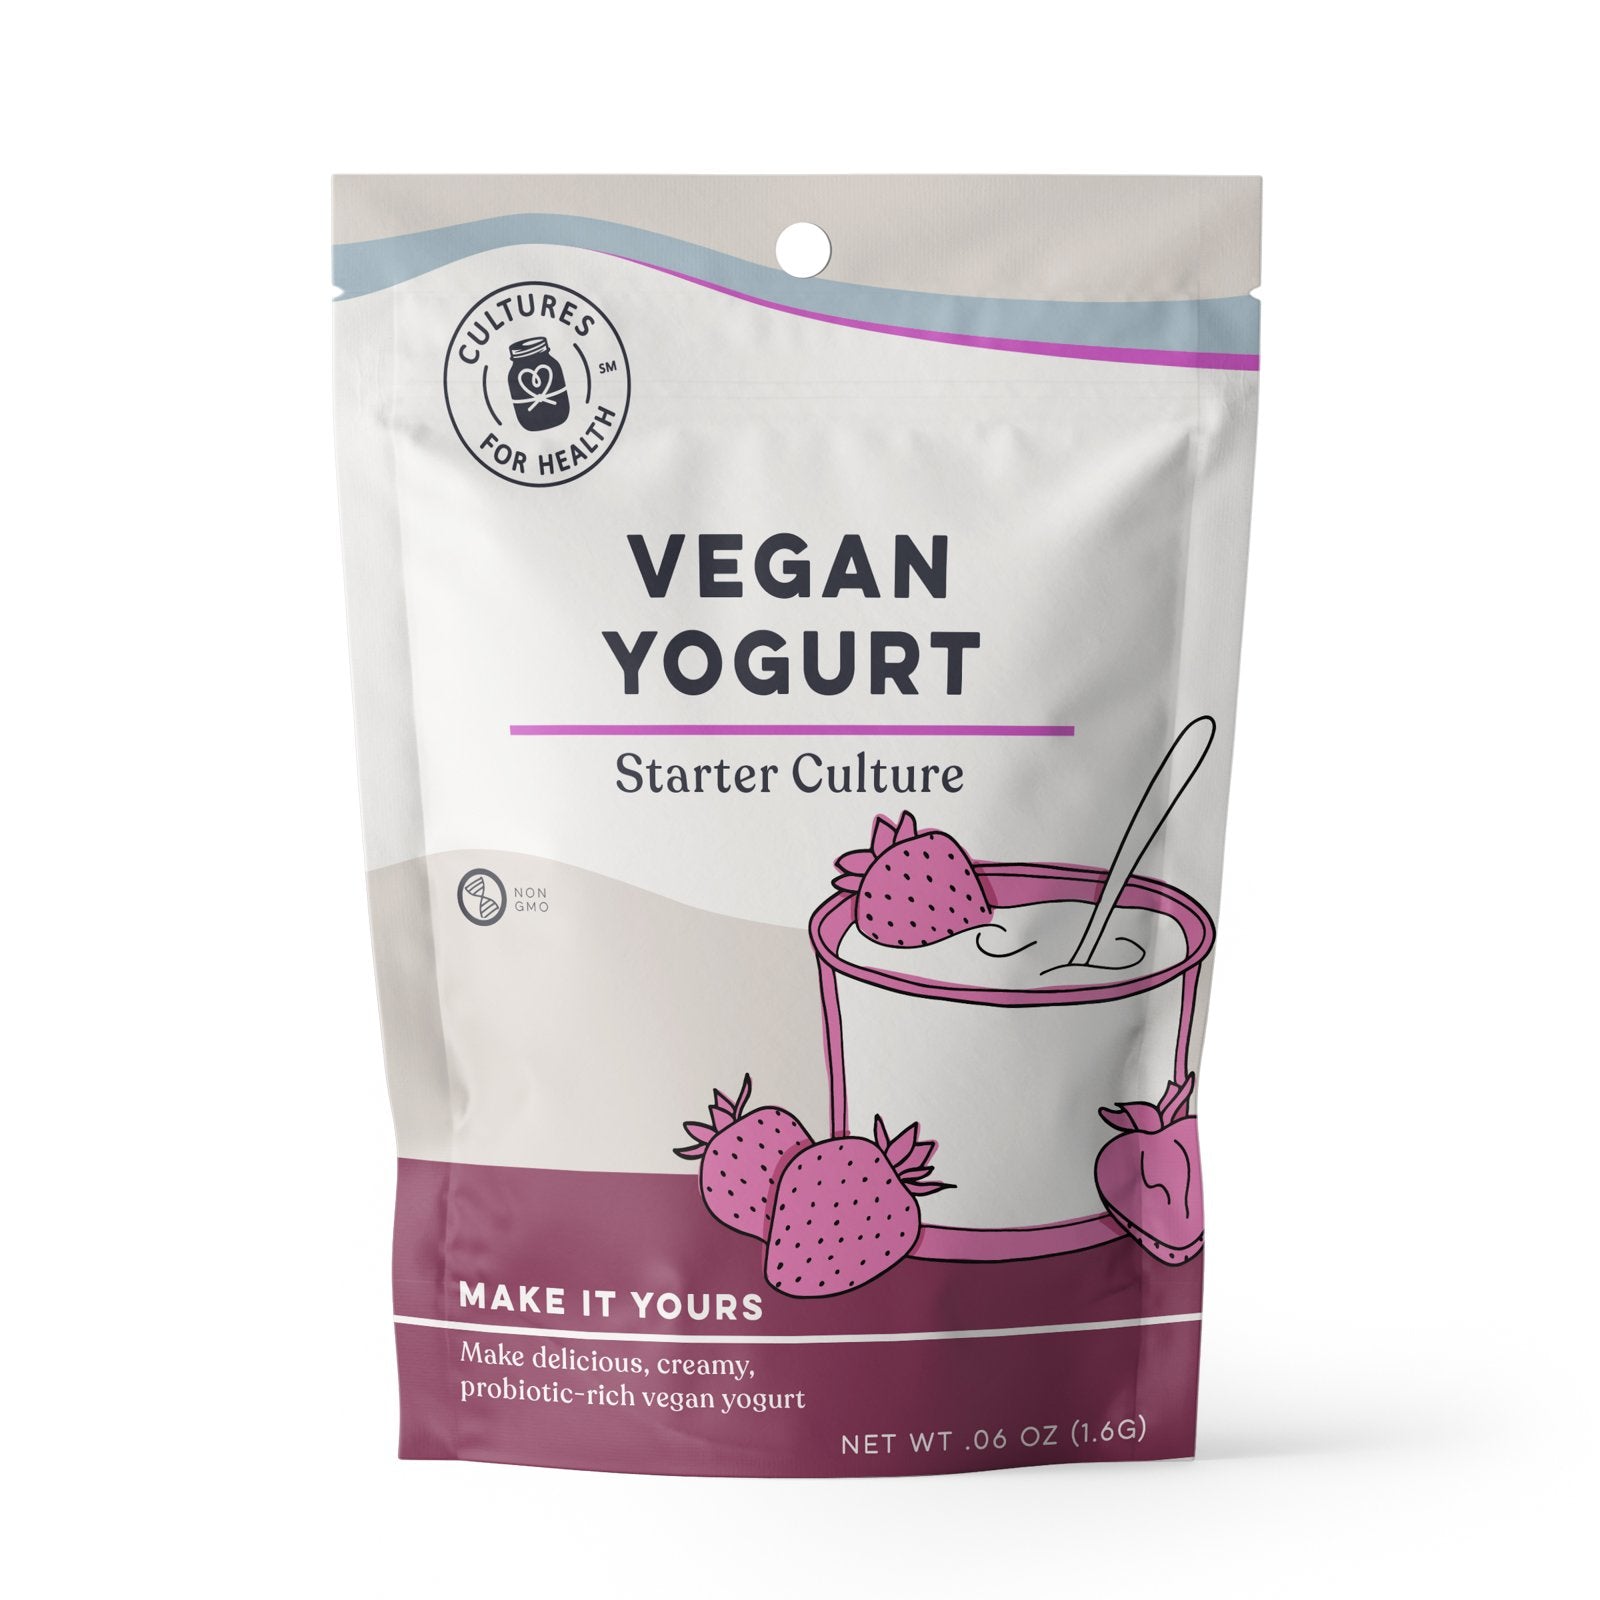 Vegan Yogurt starter culture - cultures for health